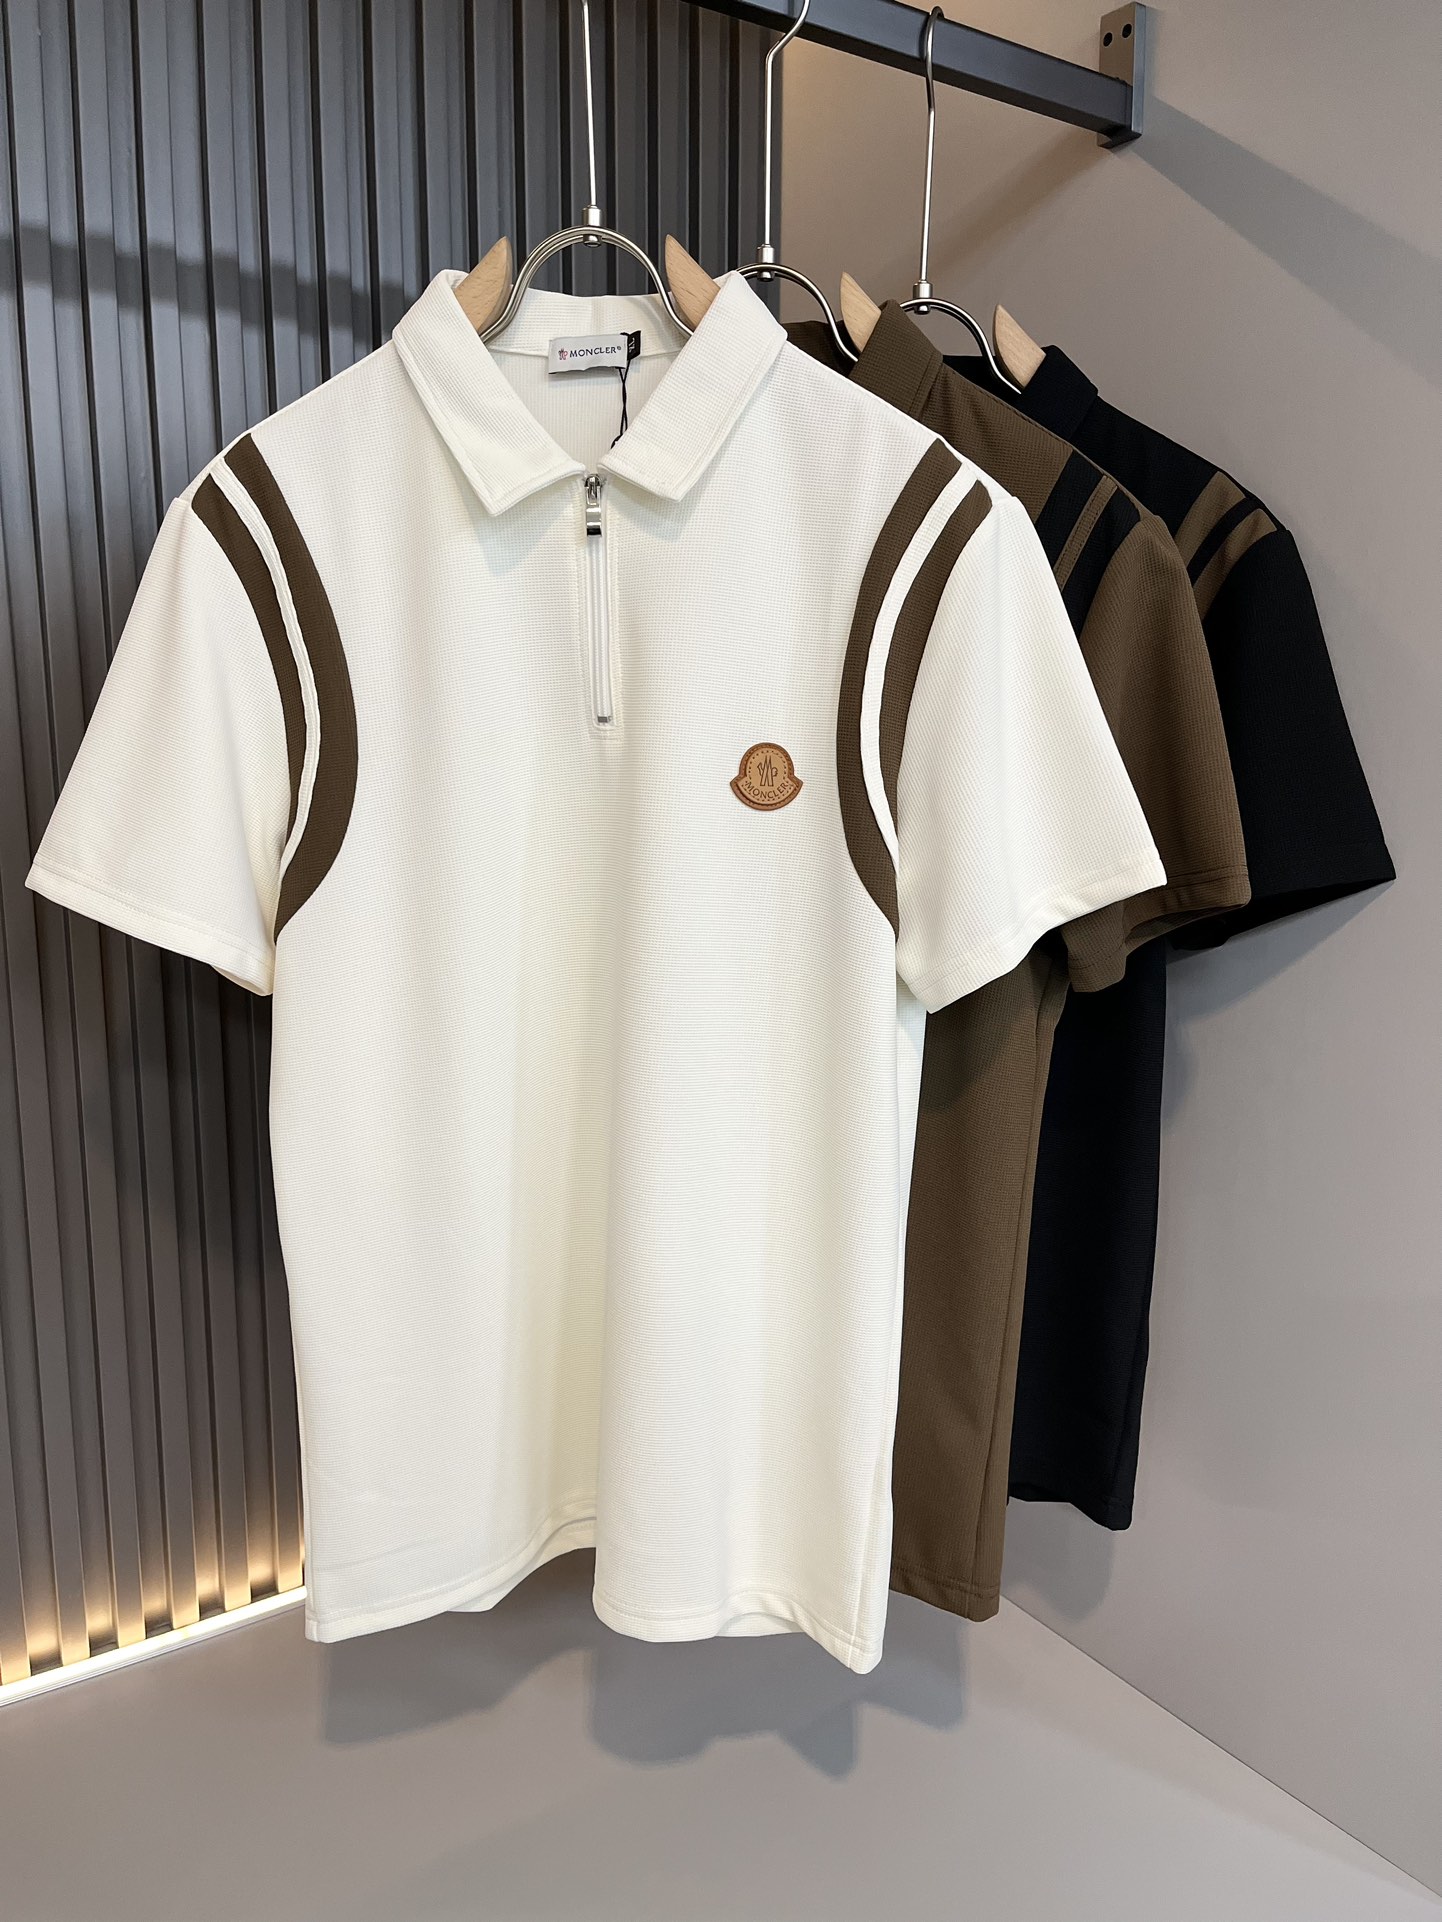 Moncler Clothing Polo T-Shirt Men Cotton Spring/Summer Collection Short Sleeve